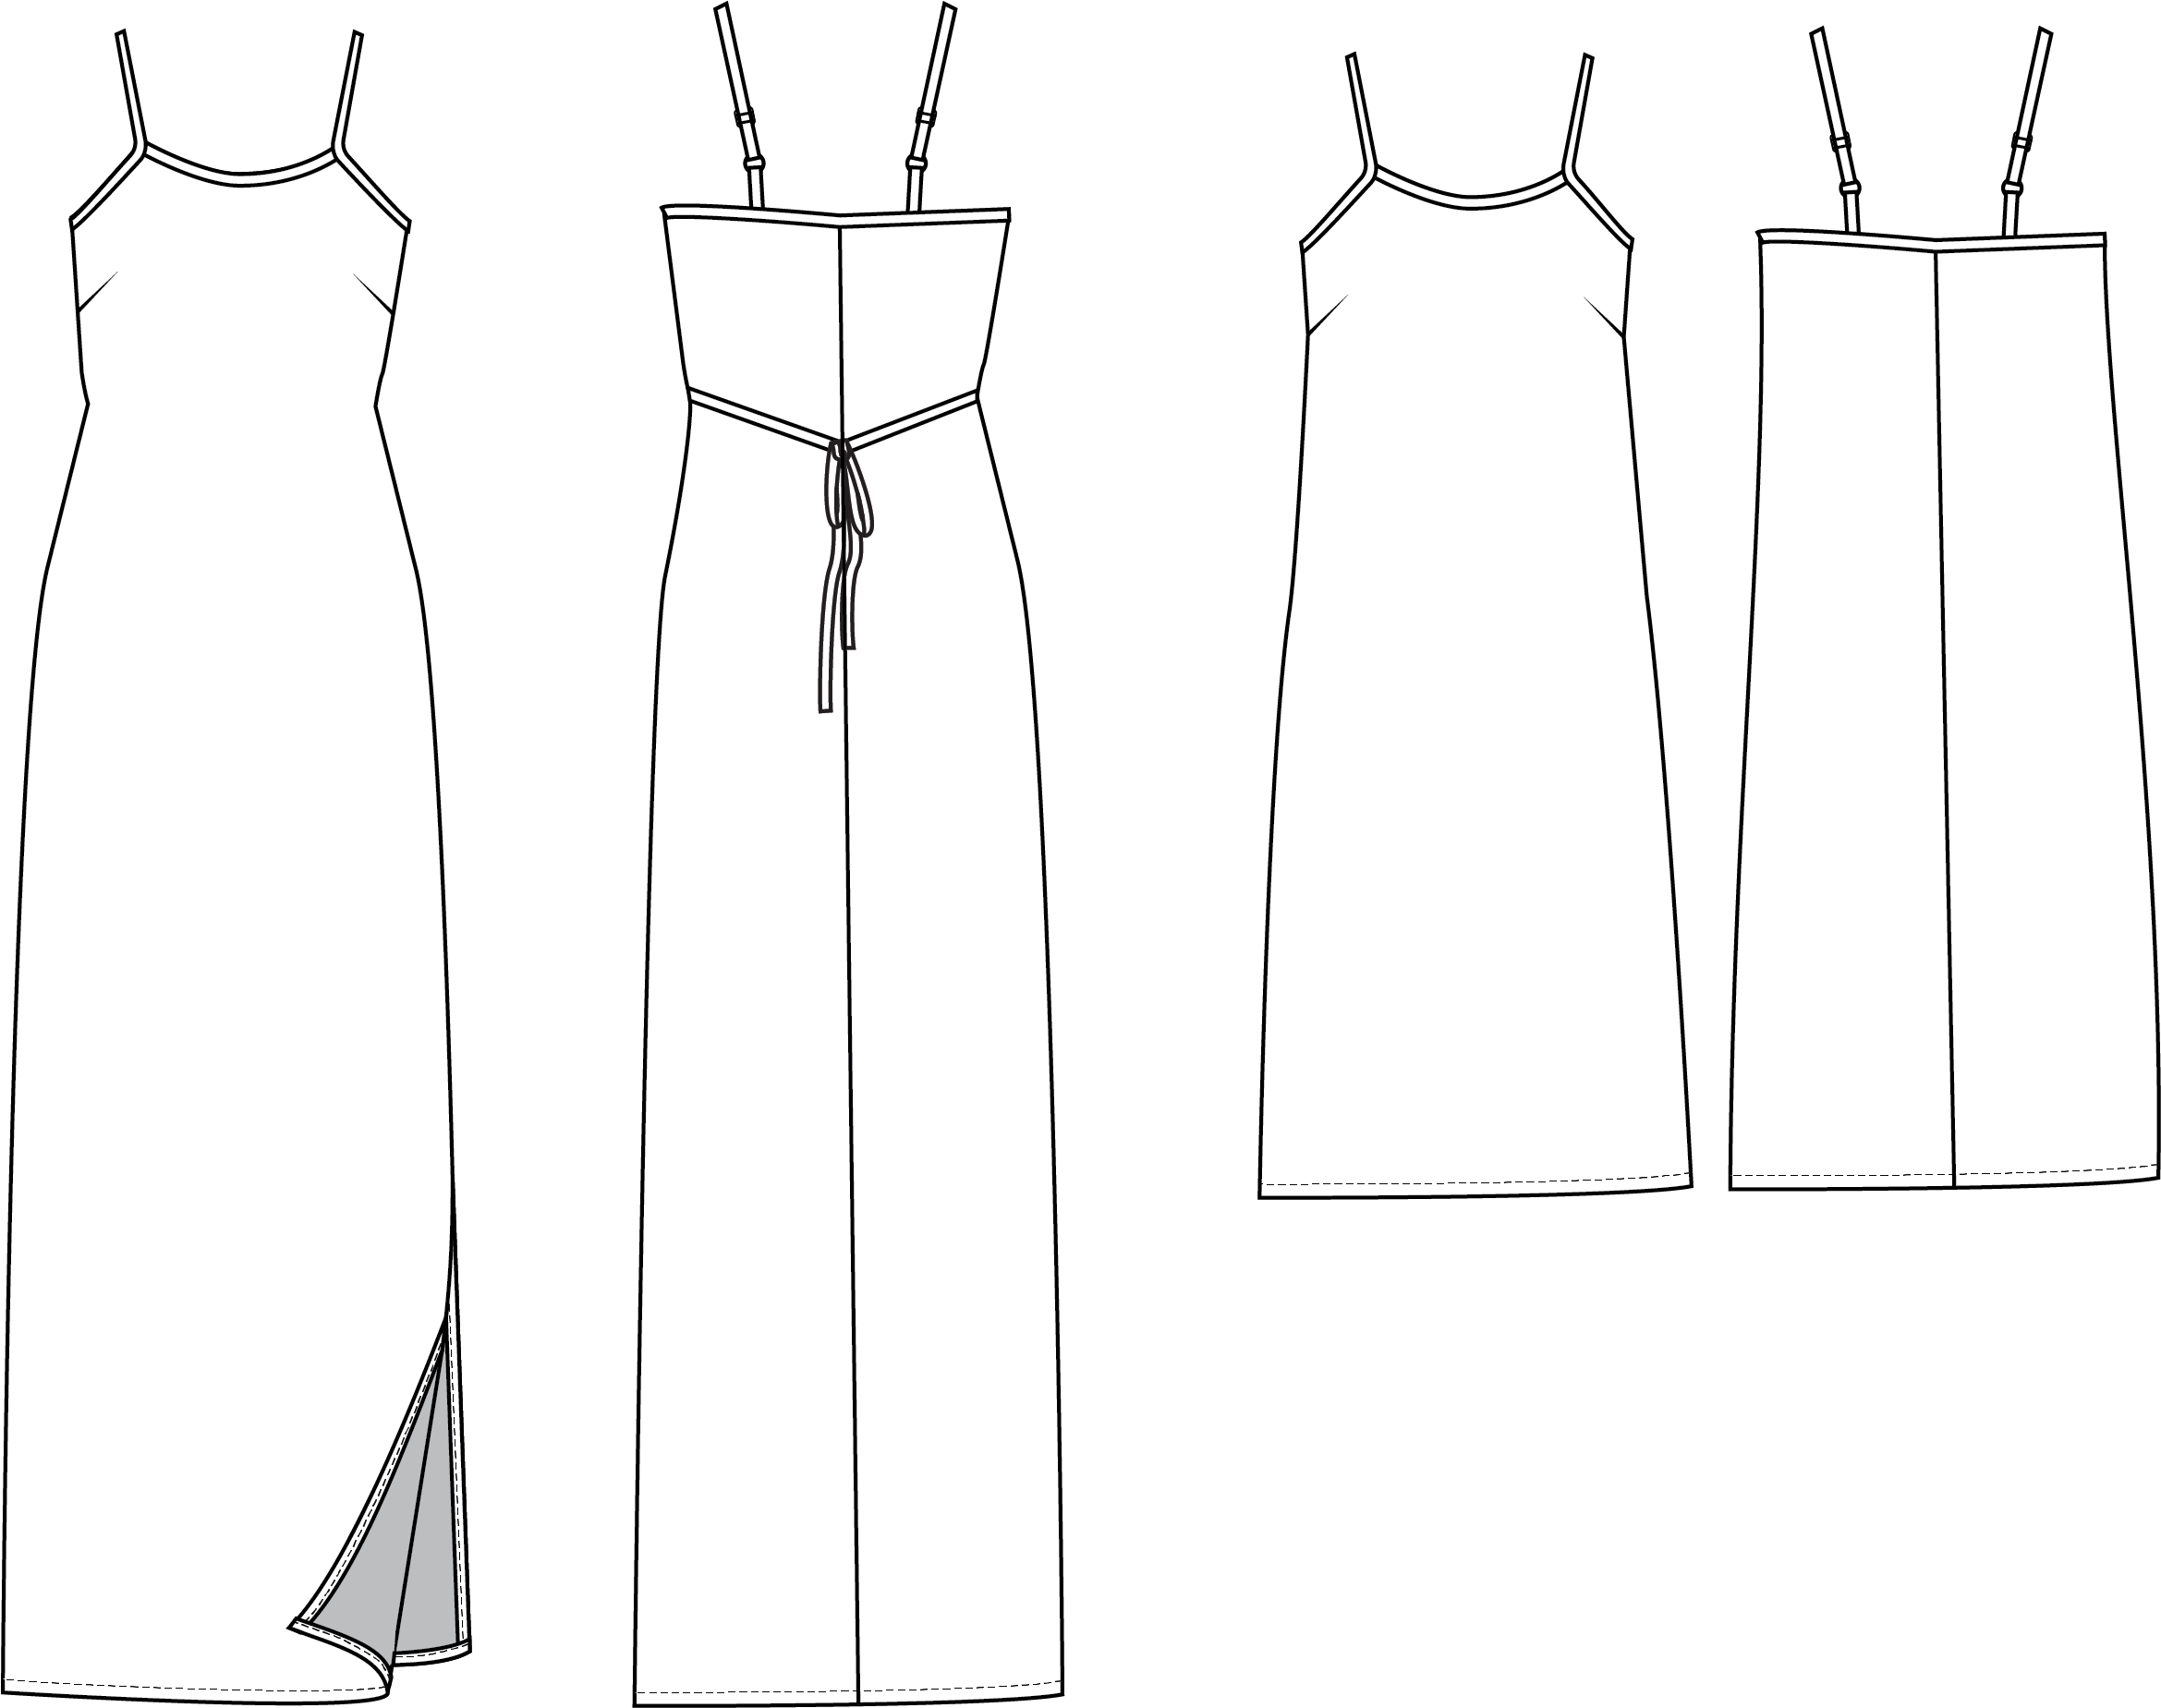 Saltwater Slip Dress - PDF Pattern